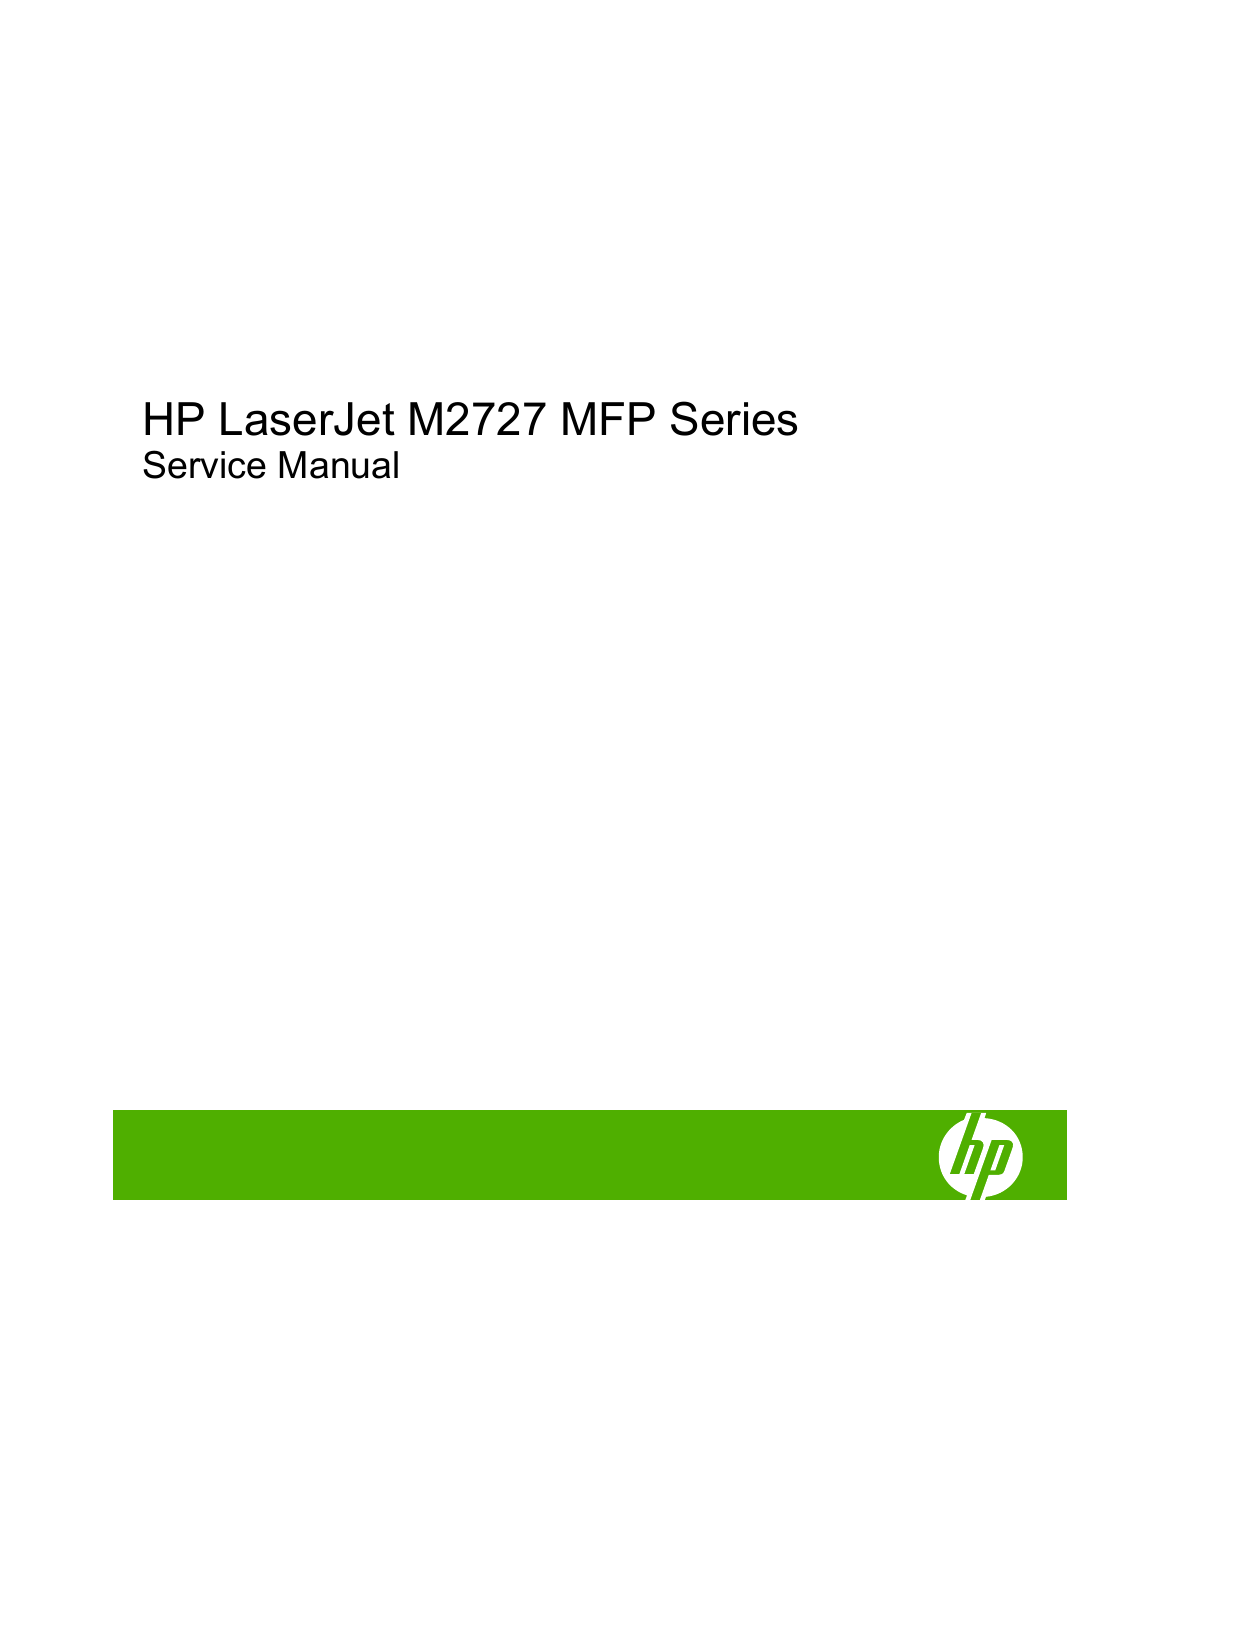 HP LaserJet M2727 multifunction printer (MFP) service guide Preview image 3